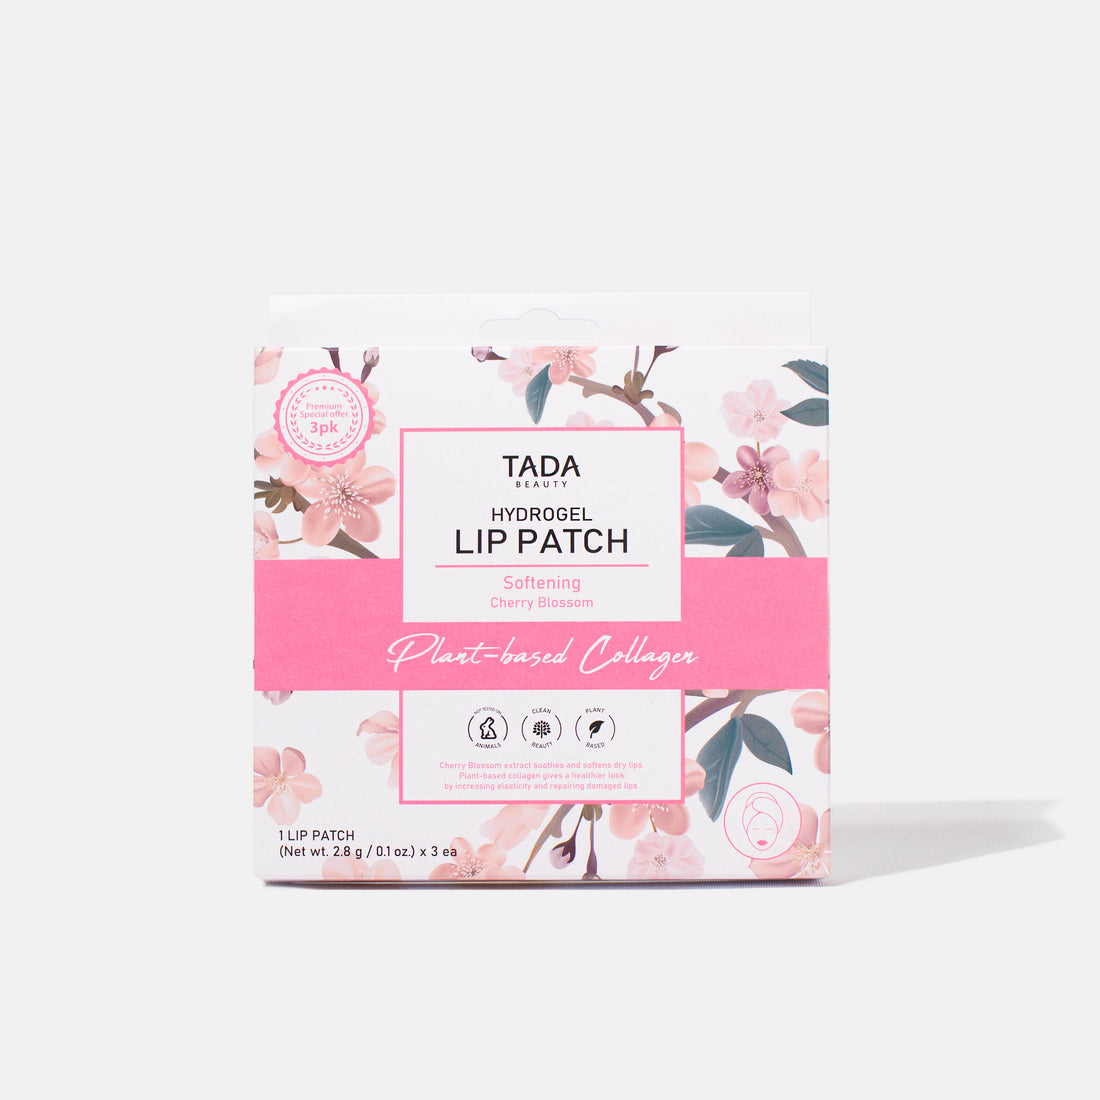 TADA Beauty | Cherry Blossom Hydrogel Lip Patch